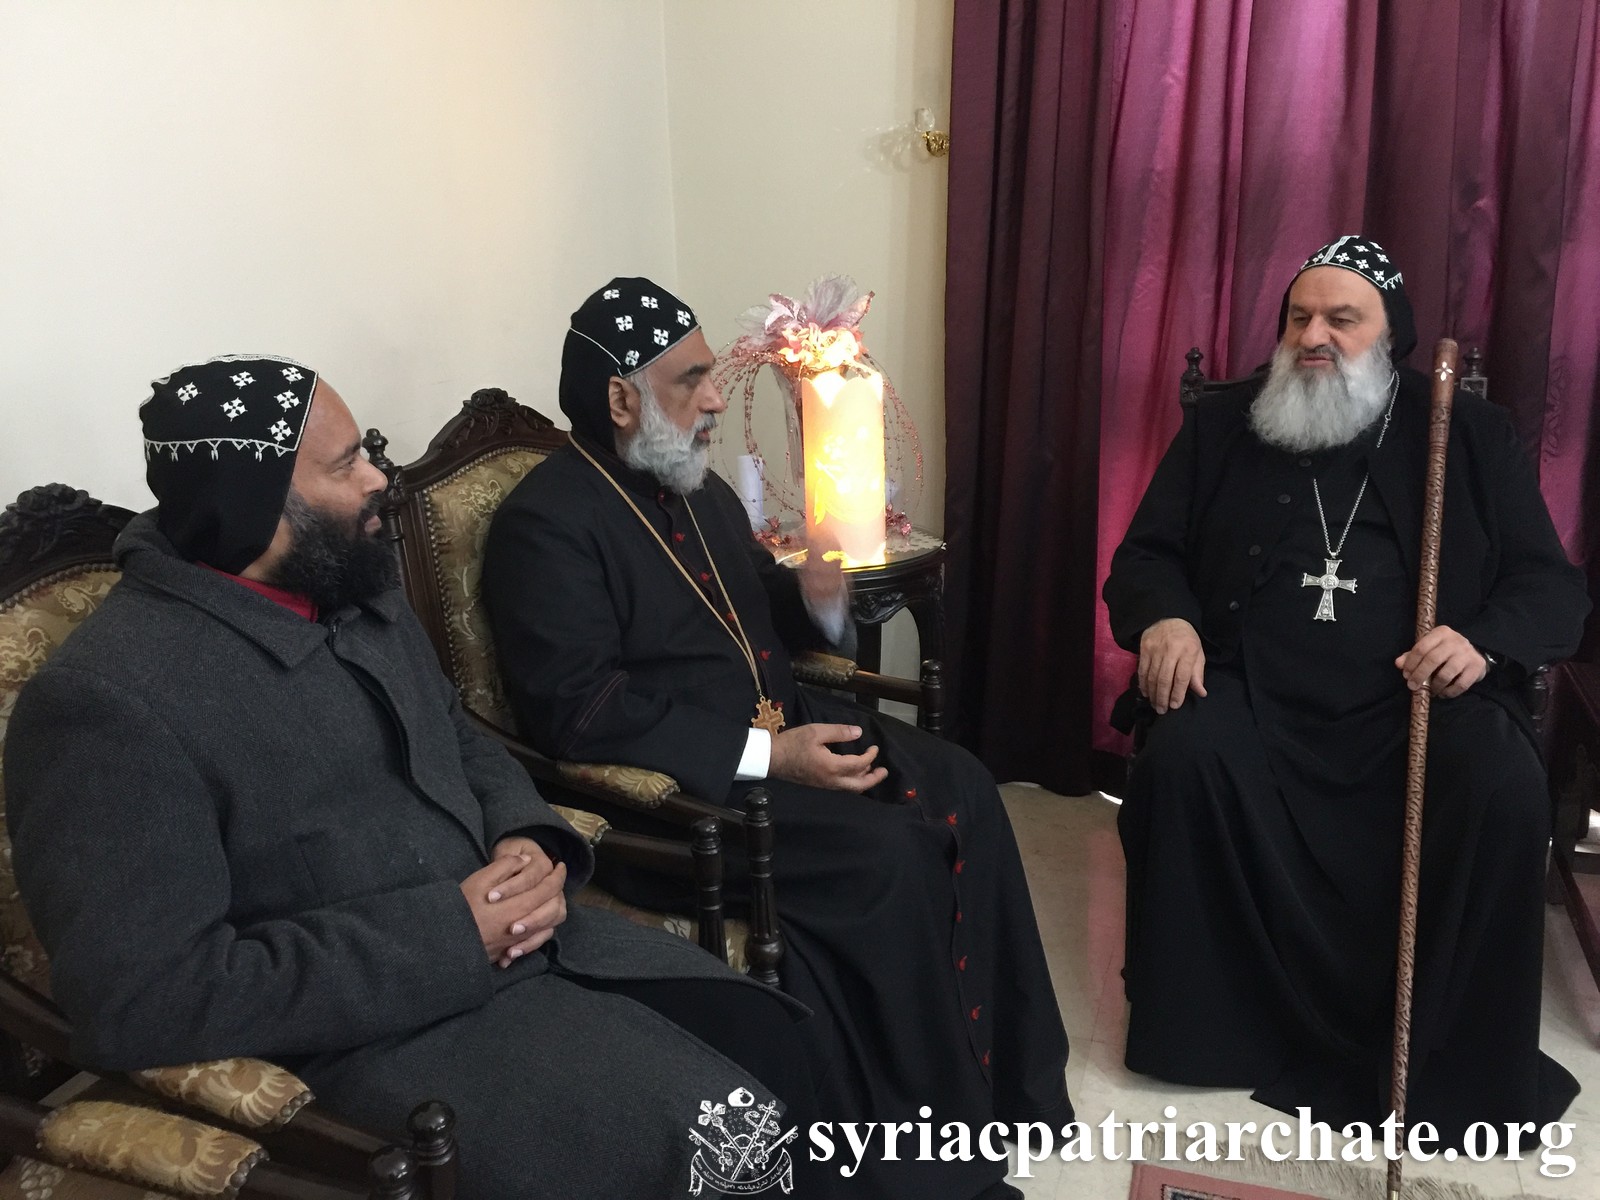 The Secretary of the Regional Synod in India Visits Patriarch Ignatius Aphrem II